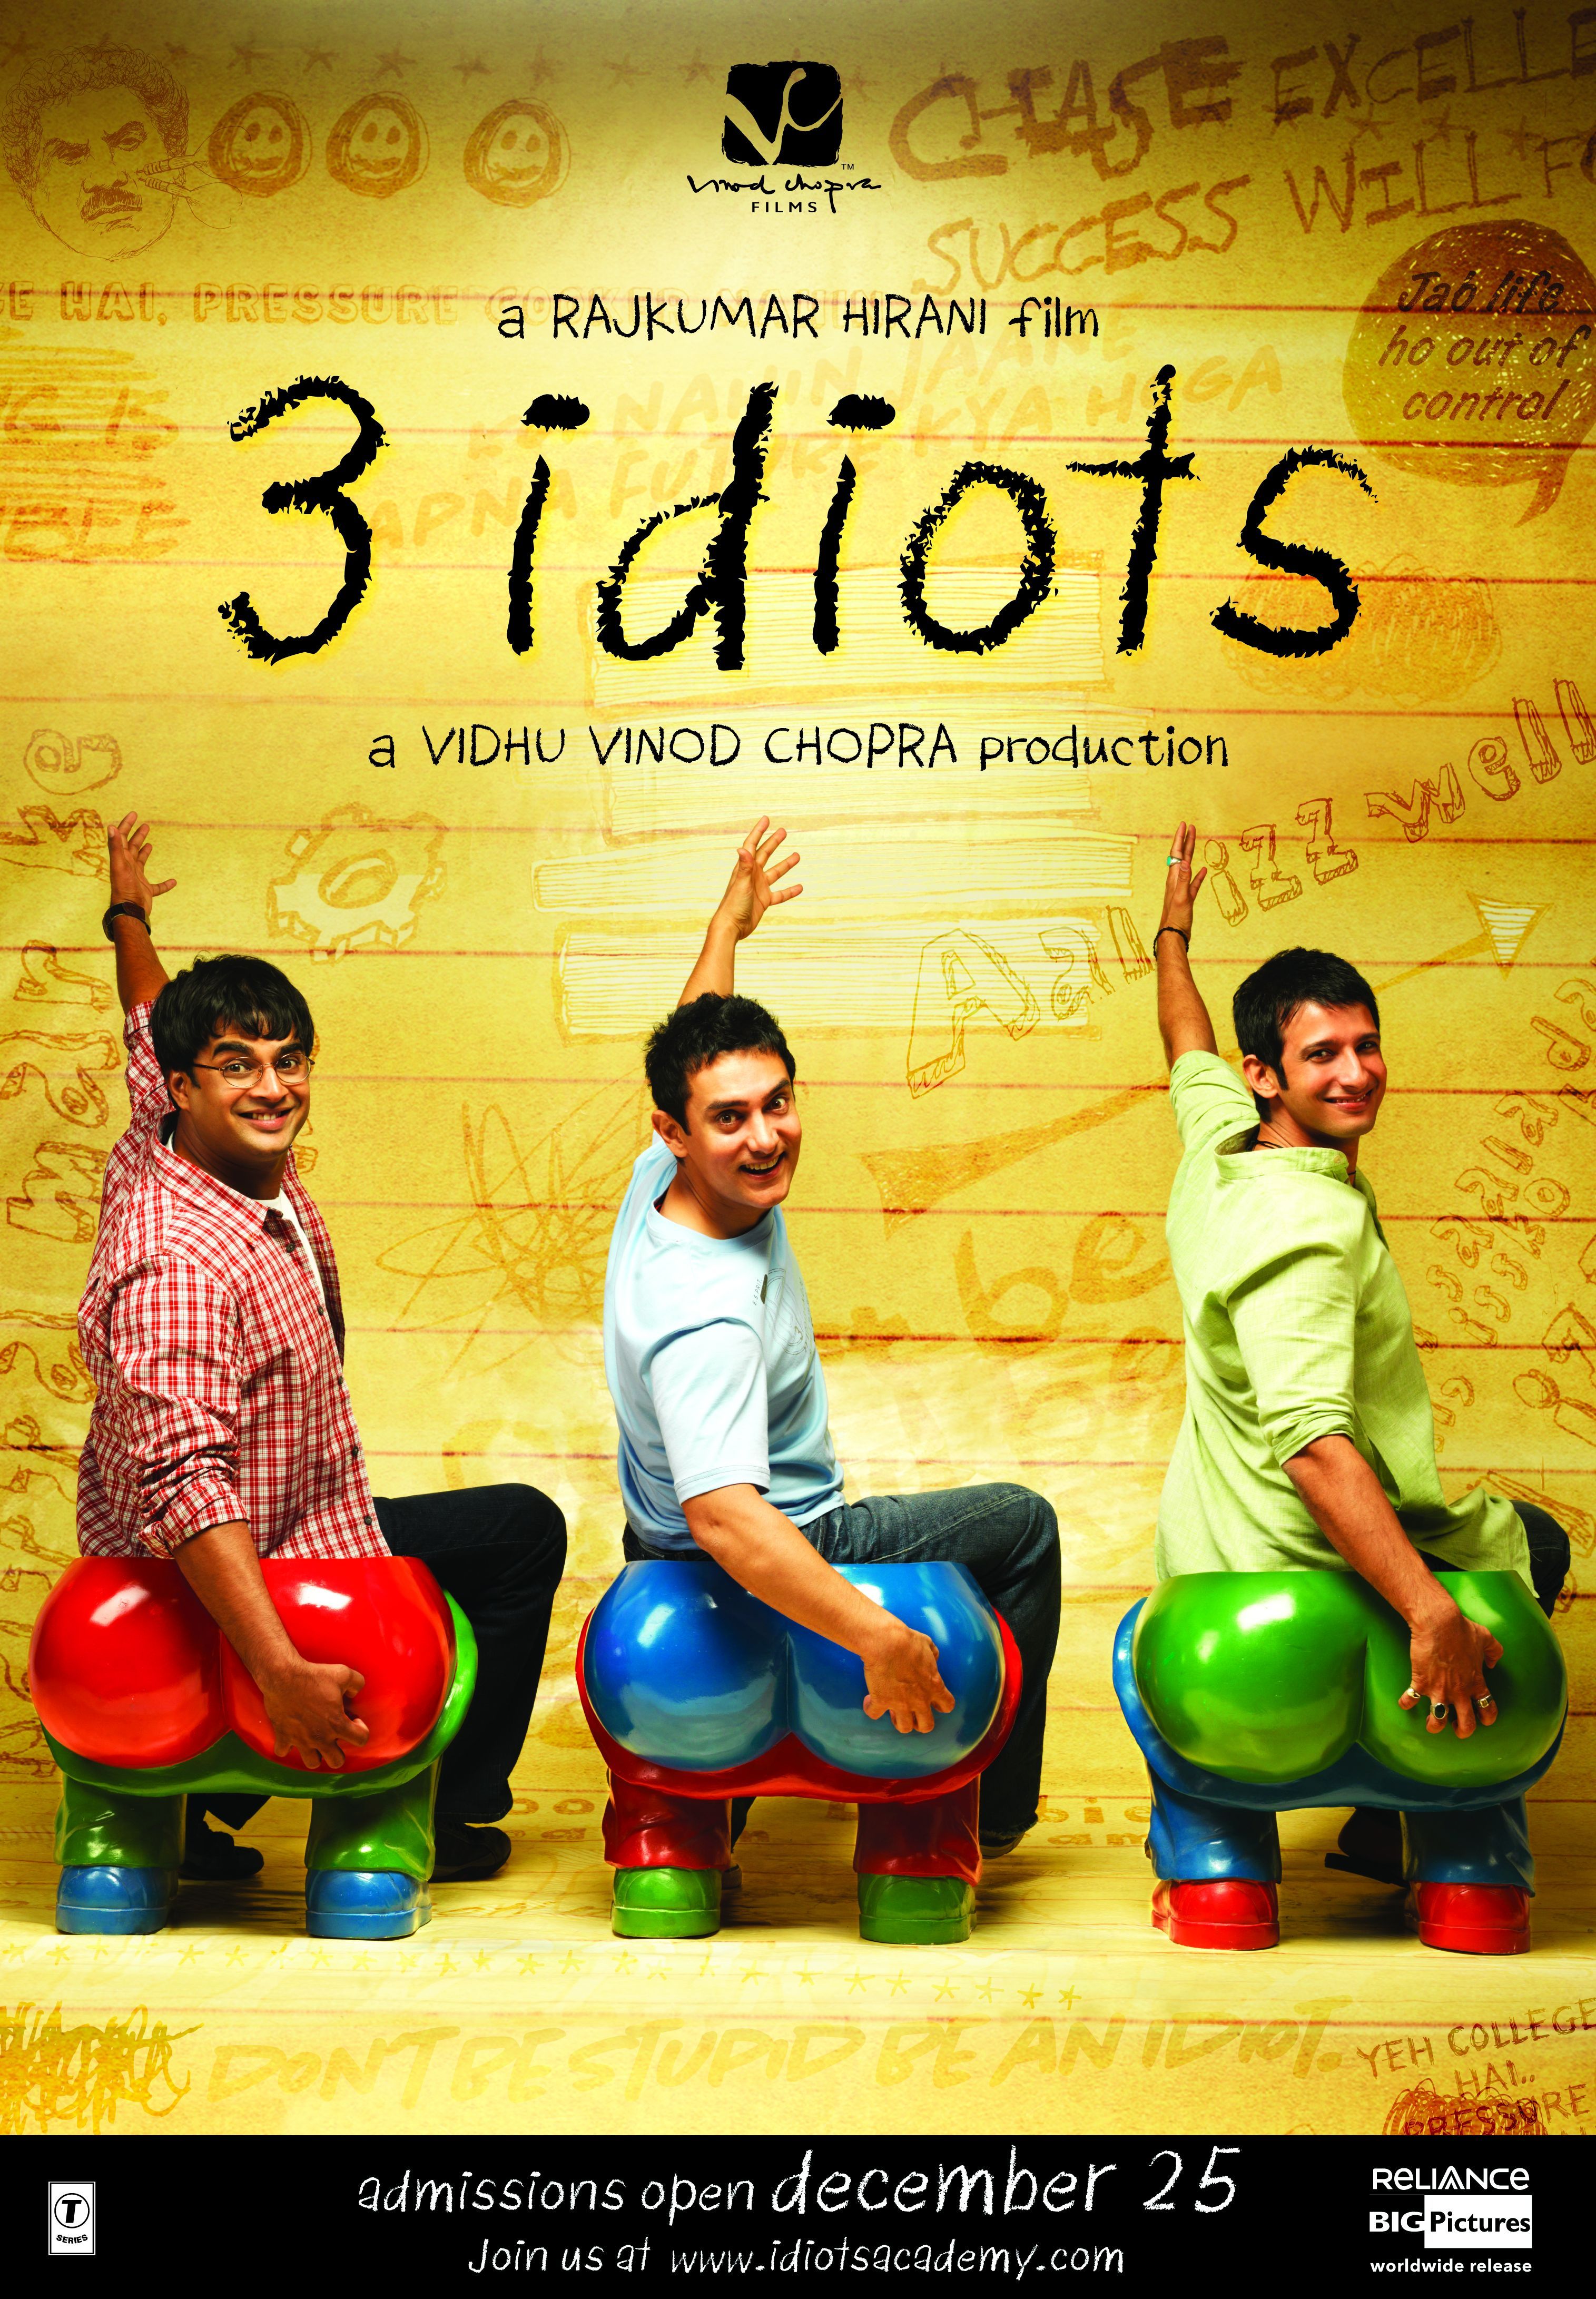 best comedy films on Netflix 3 Idiots